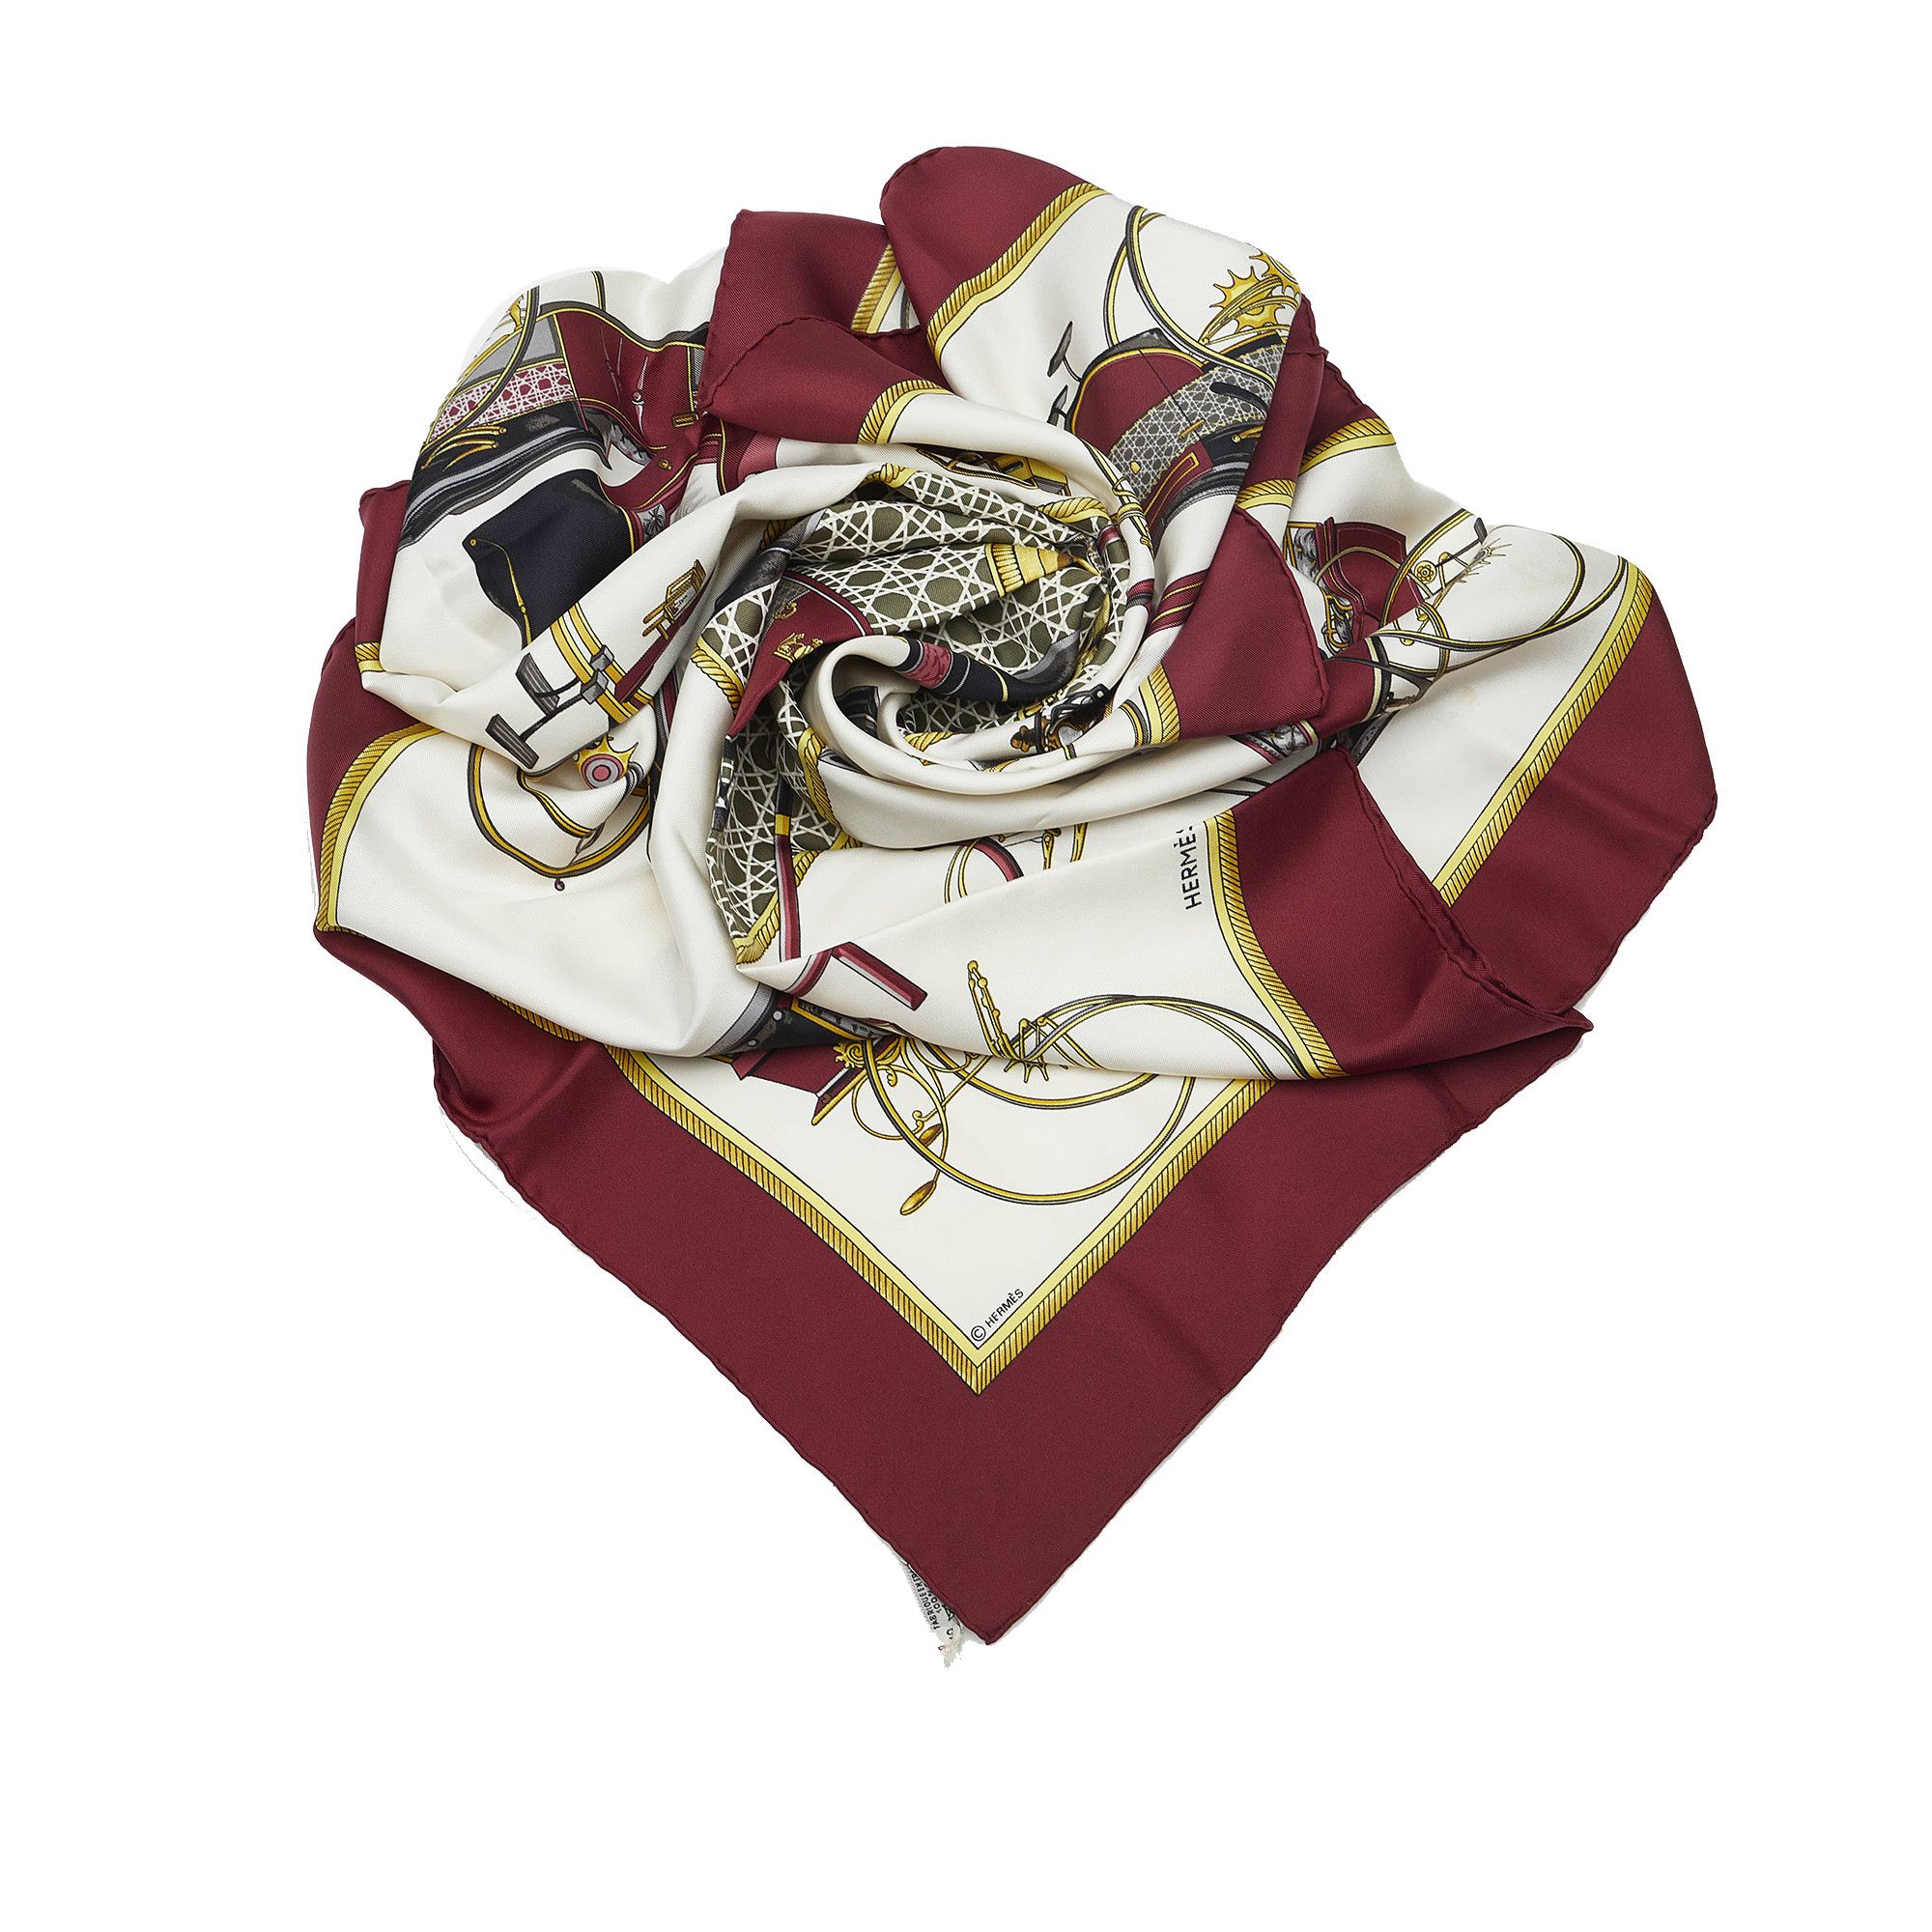 Printed silk scarf 'Les Voitures à transformation', Hermès